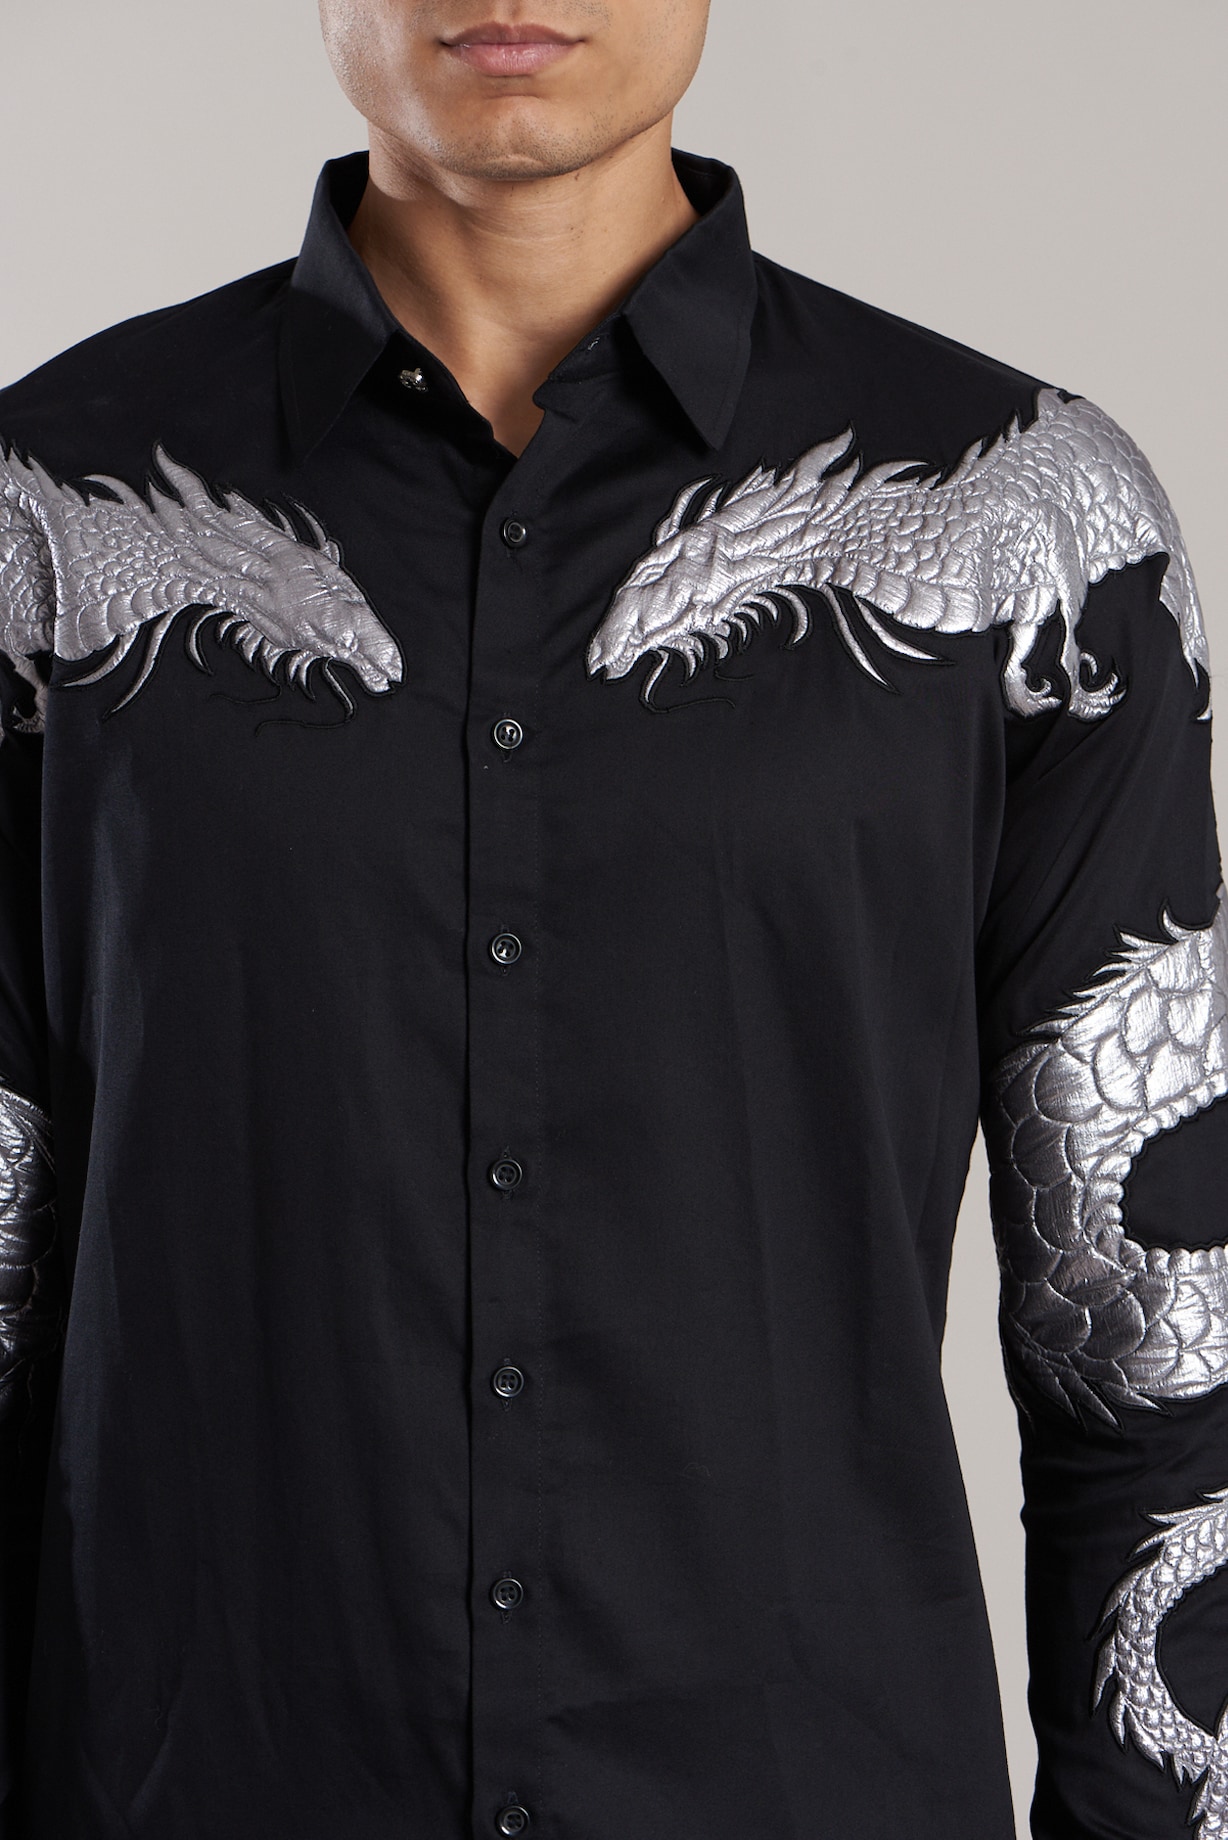 Black Embroidered Shirt by Jubinav Chadha Men